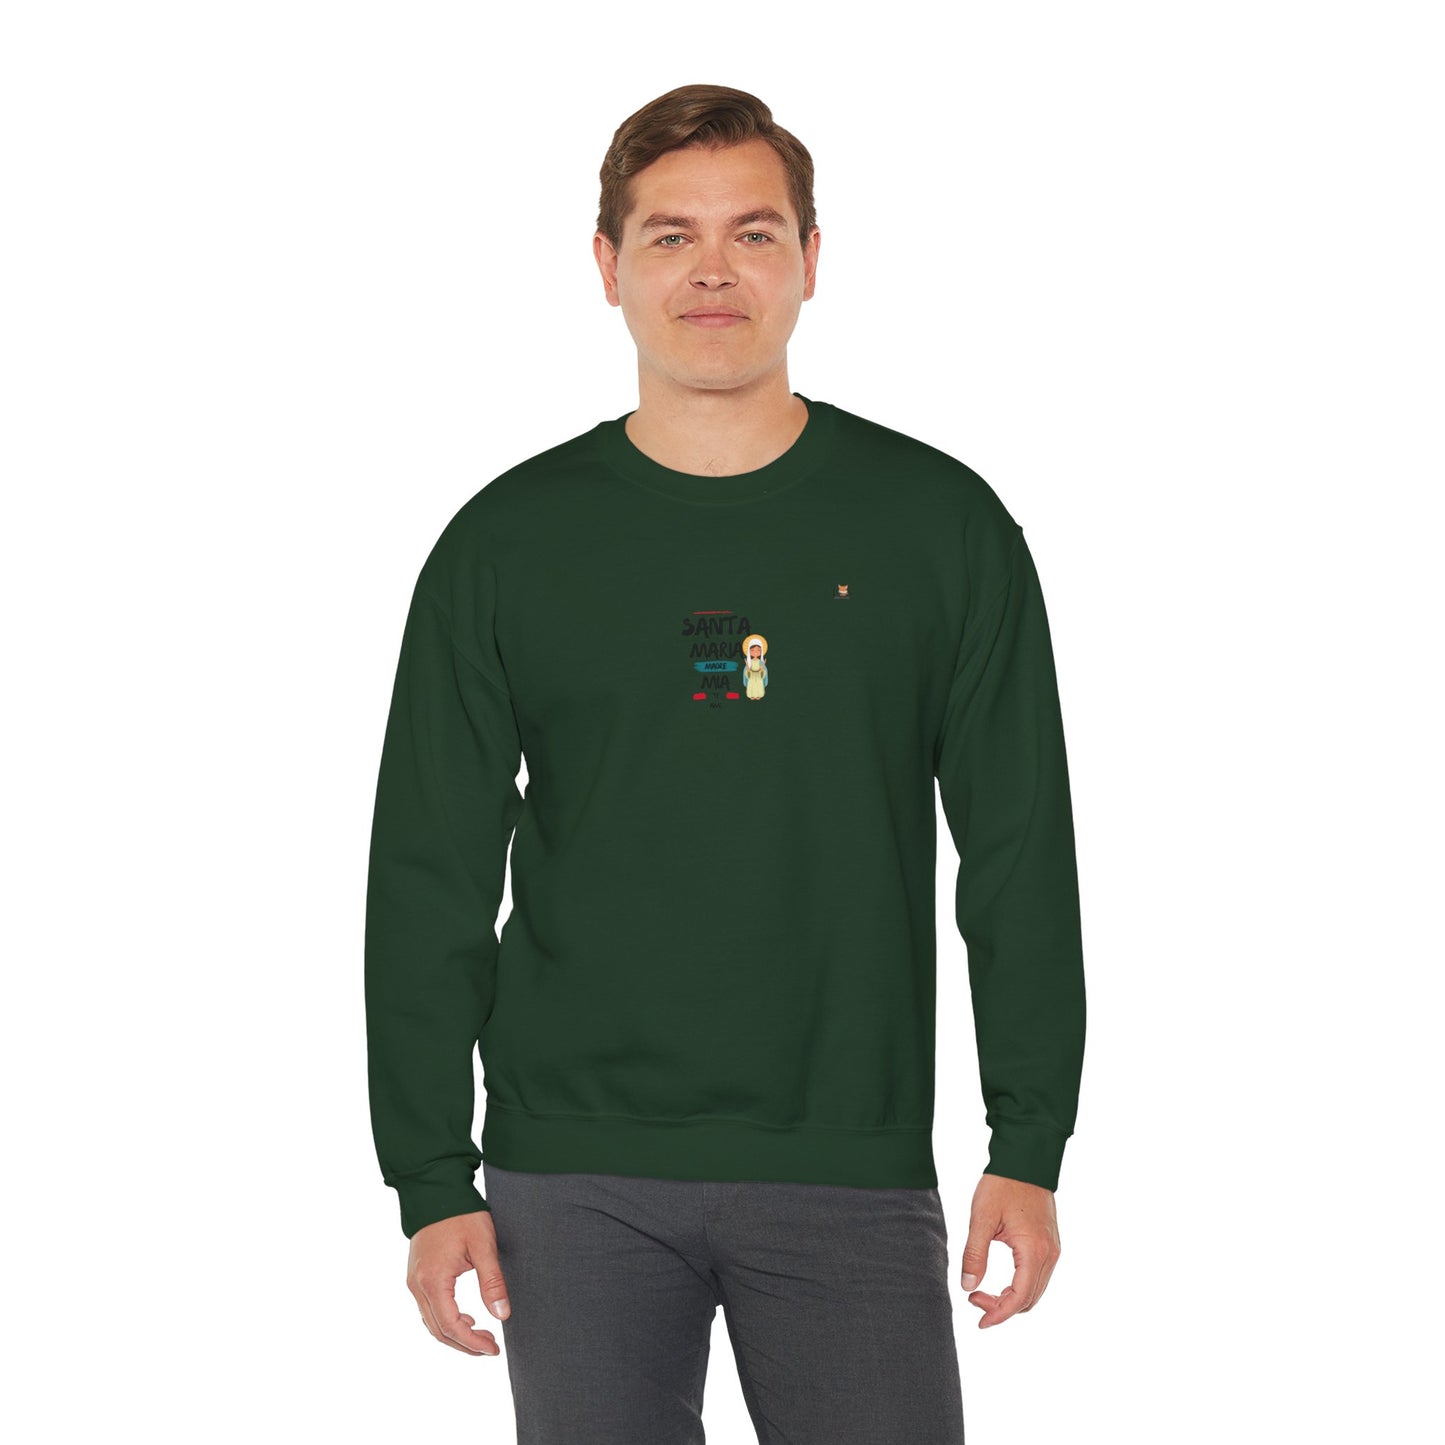 Santa Maria Te Amo [Spanish]- Unisex Crewneck Sweatshirt